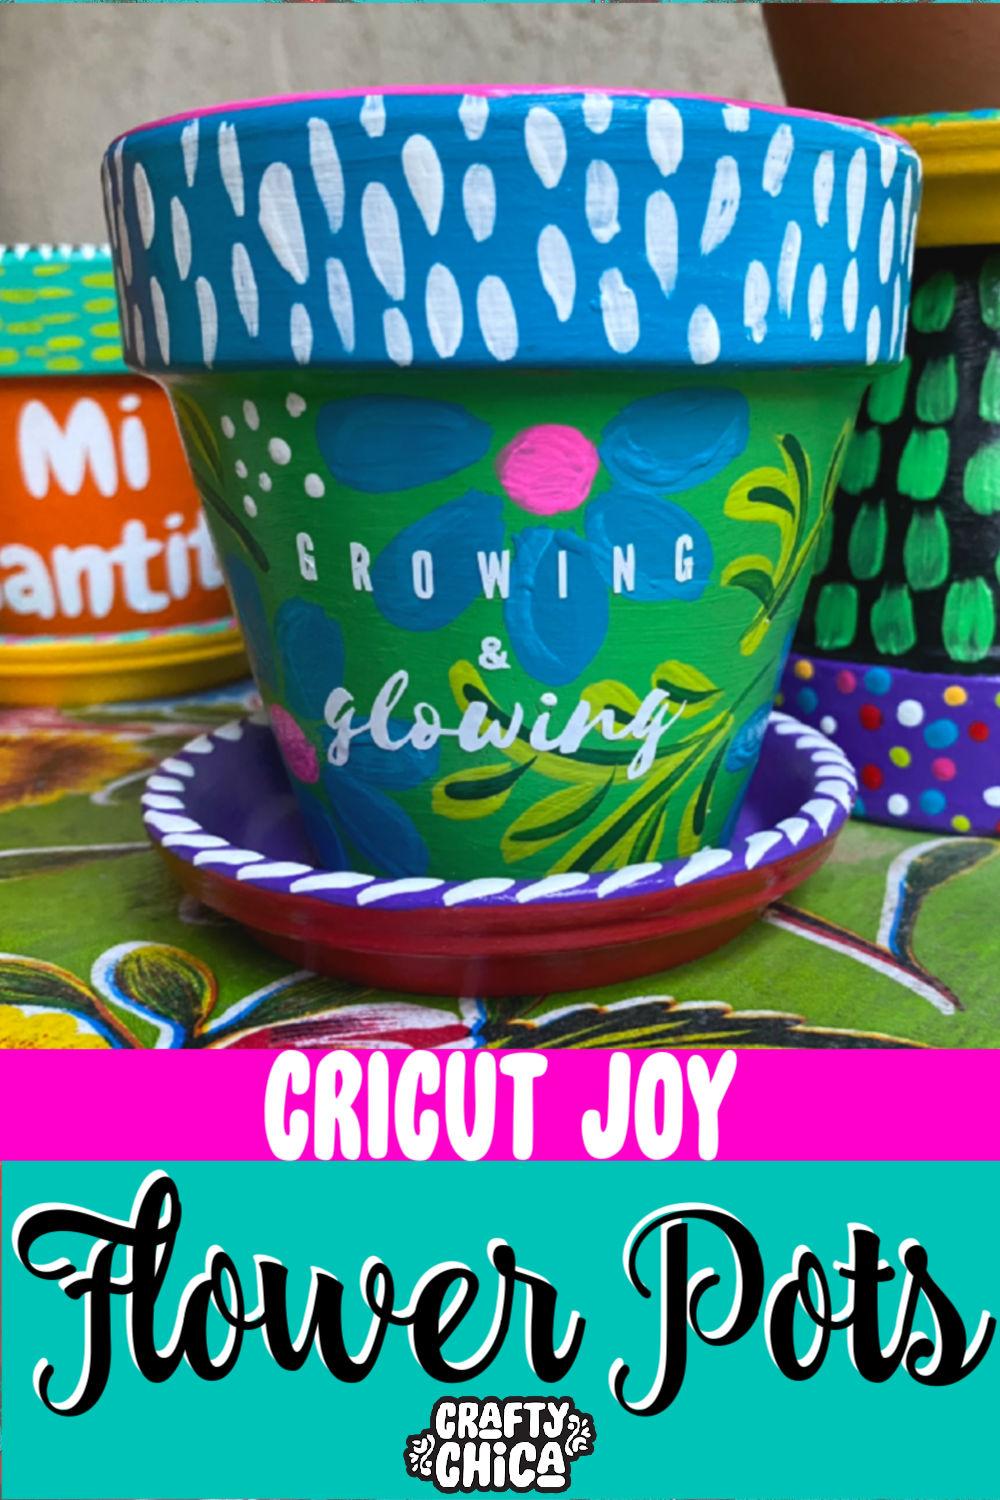 Cricut Joy projects - DIY Painted Planters! #craftychica #cricutjoy